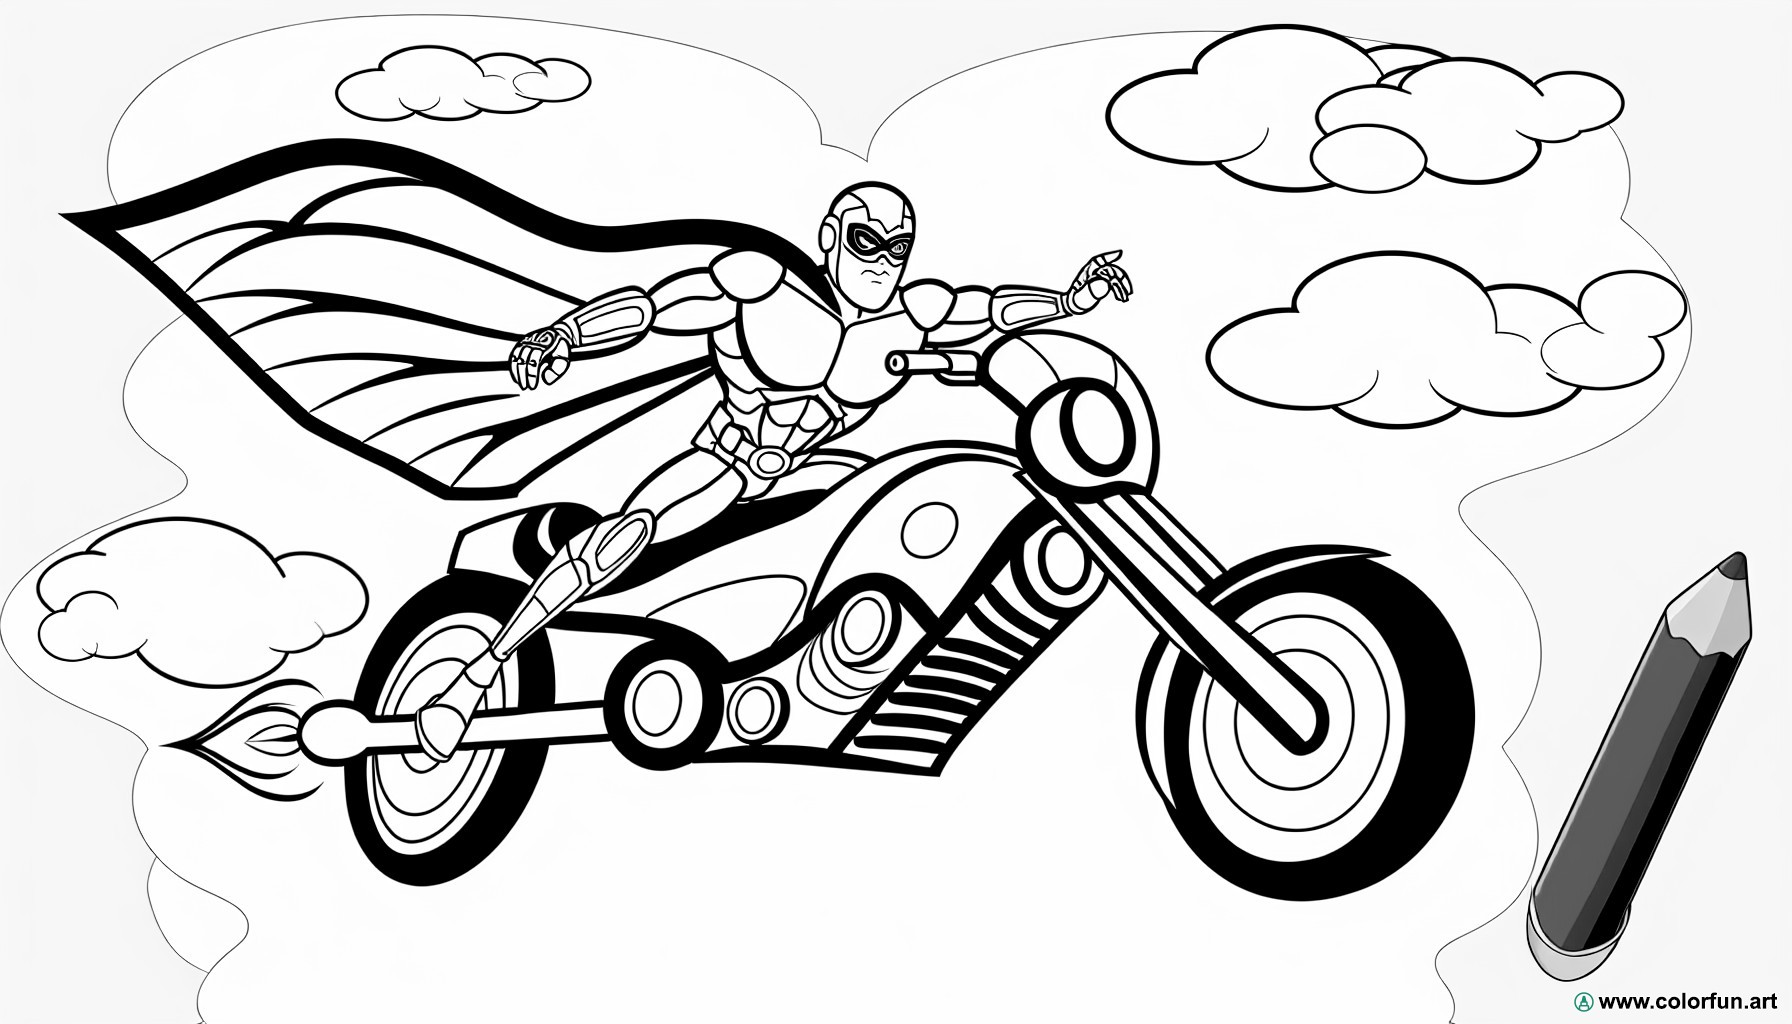 Batman motorcycle coloring page